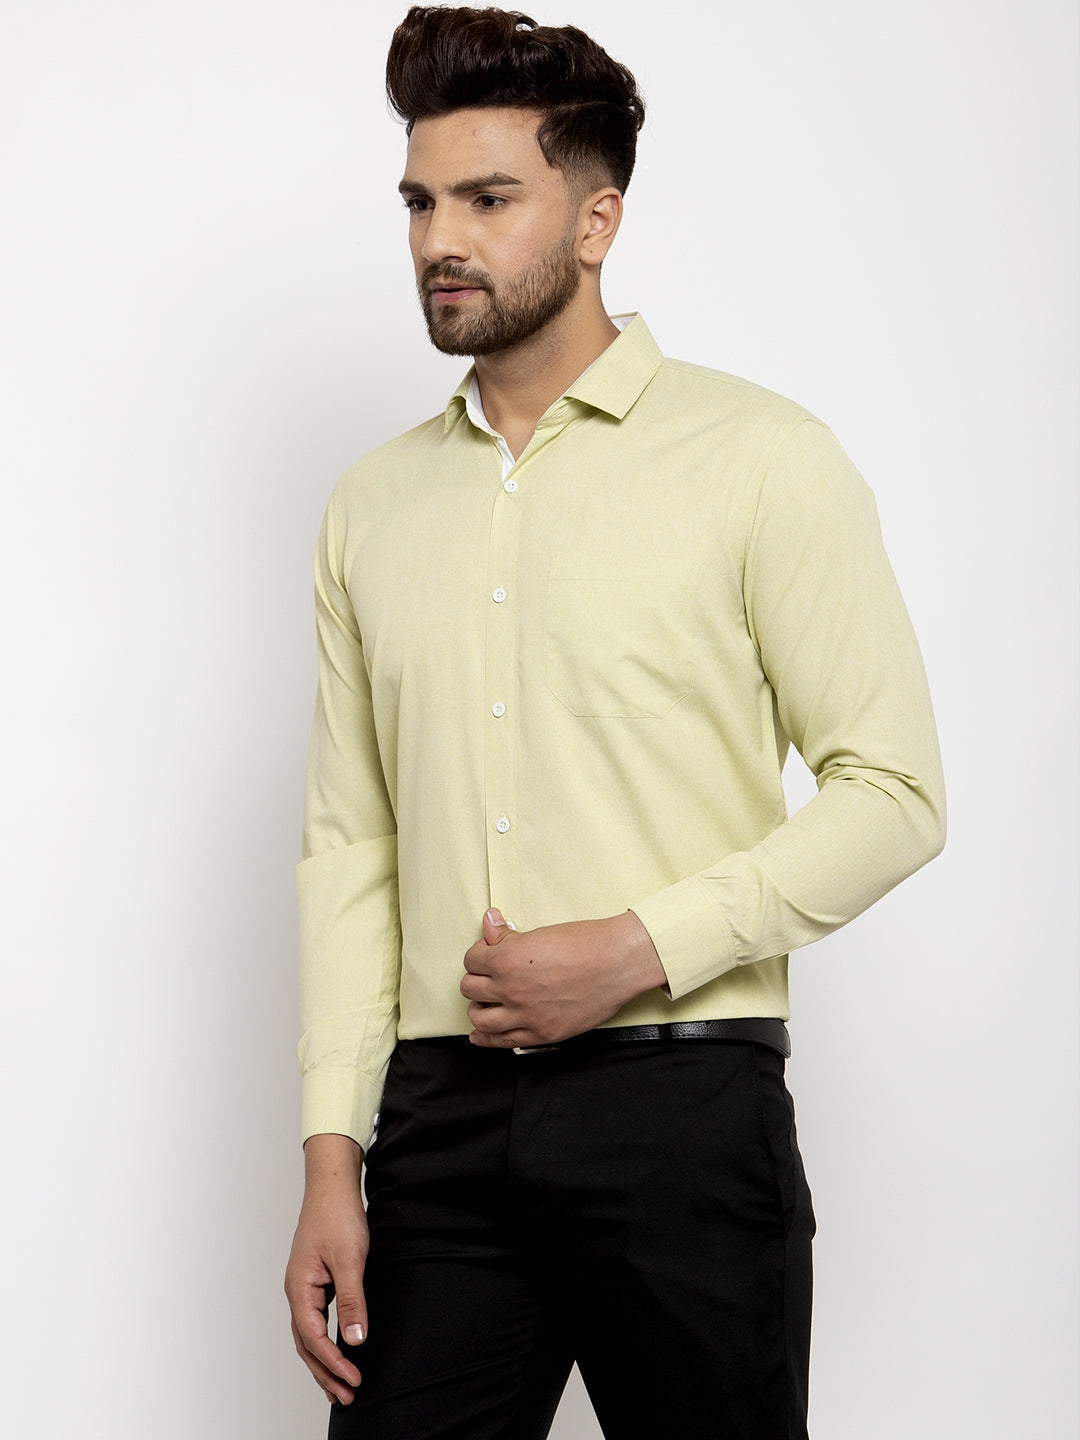 Men's Lime Green Formal Shirt with white detailing ( SF 419Lime-Green ) - Jainish